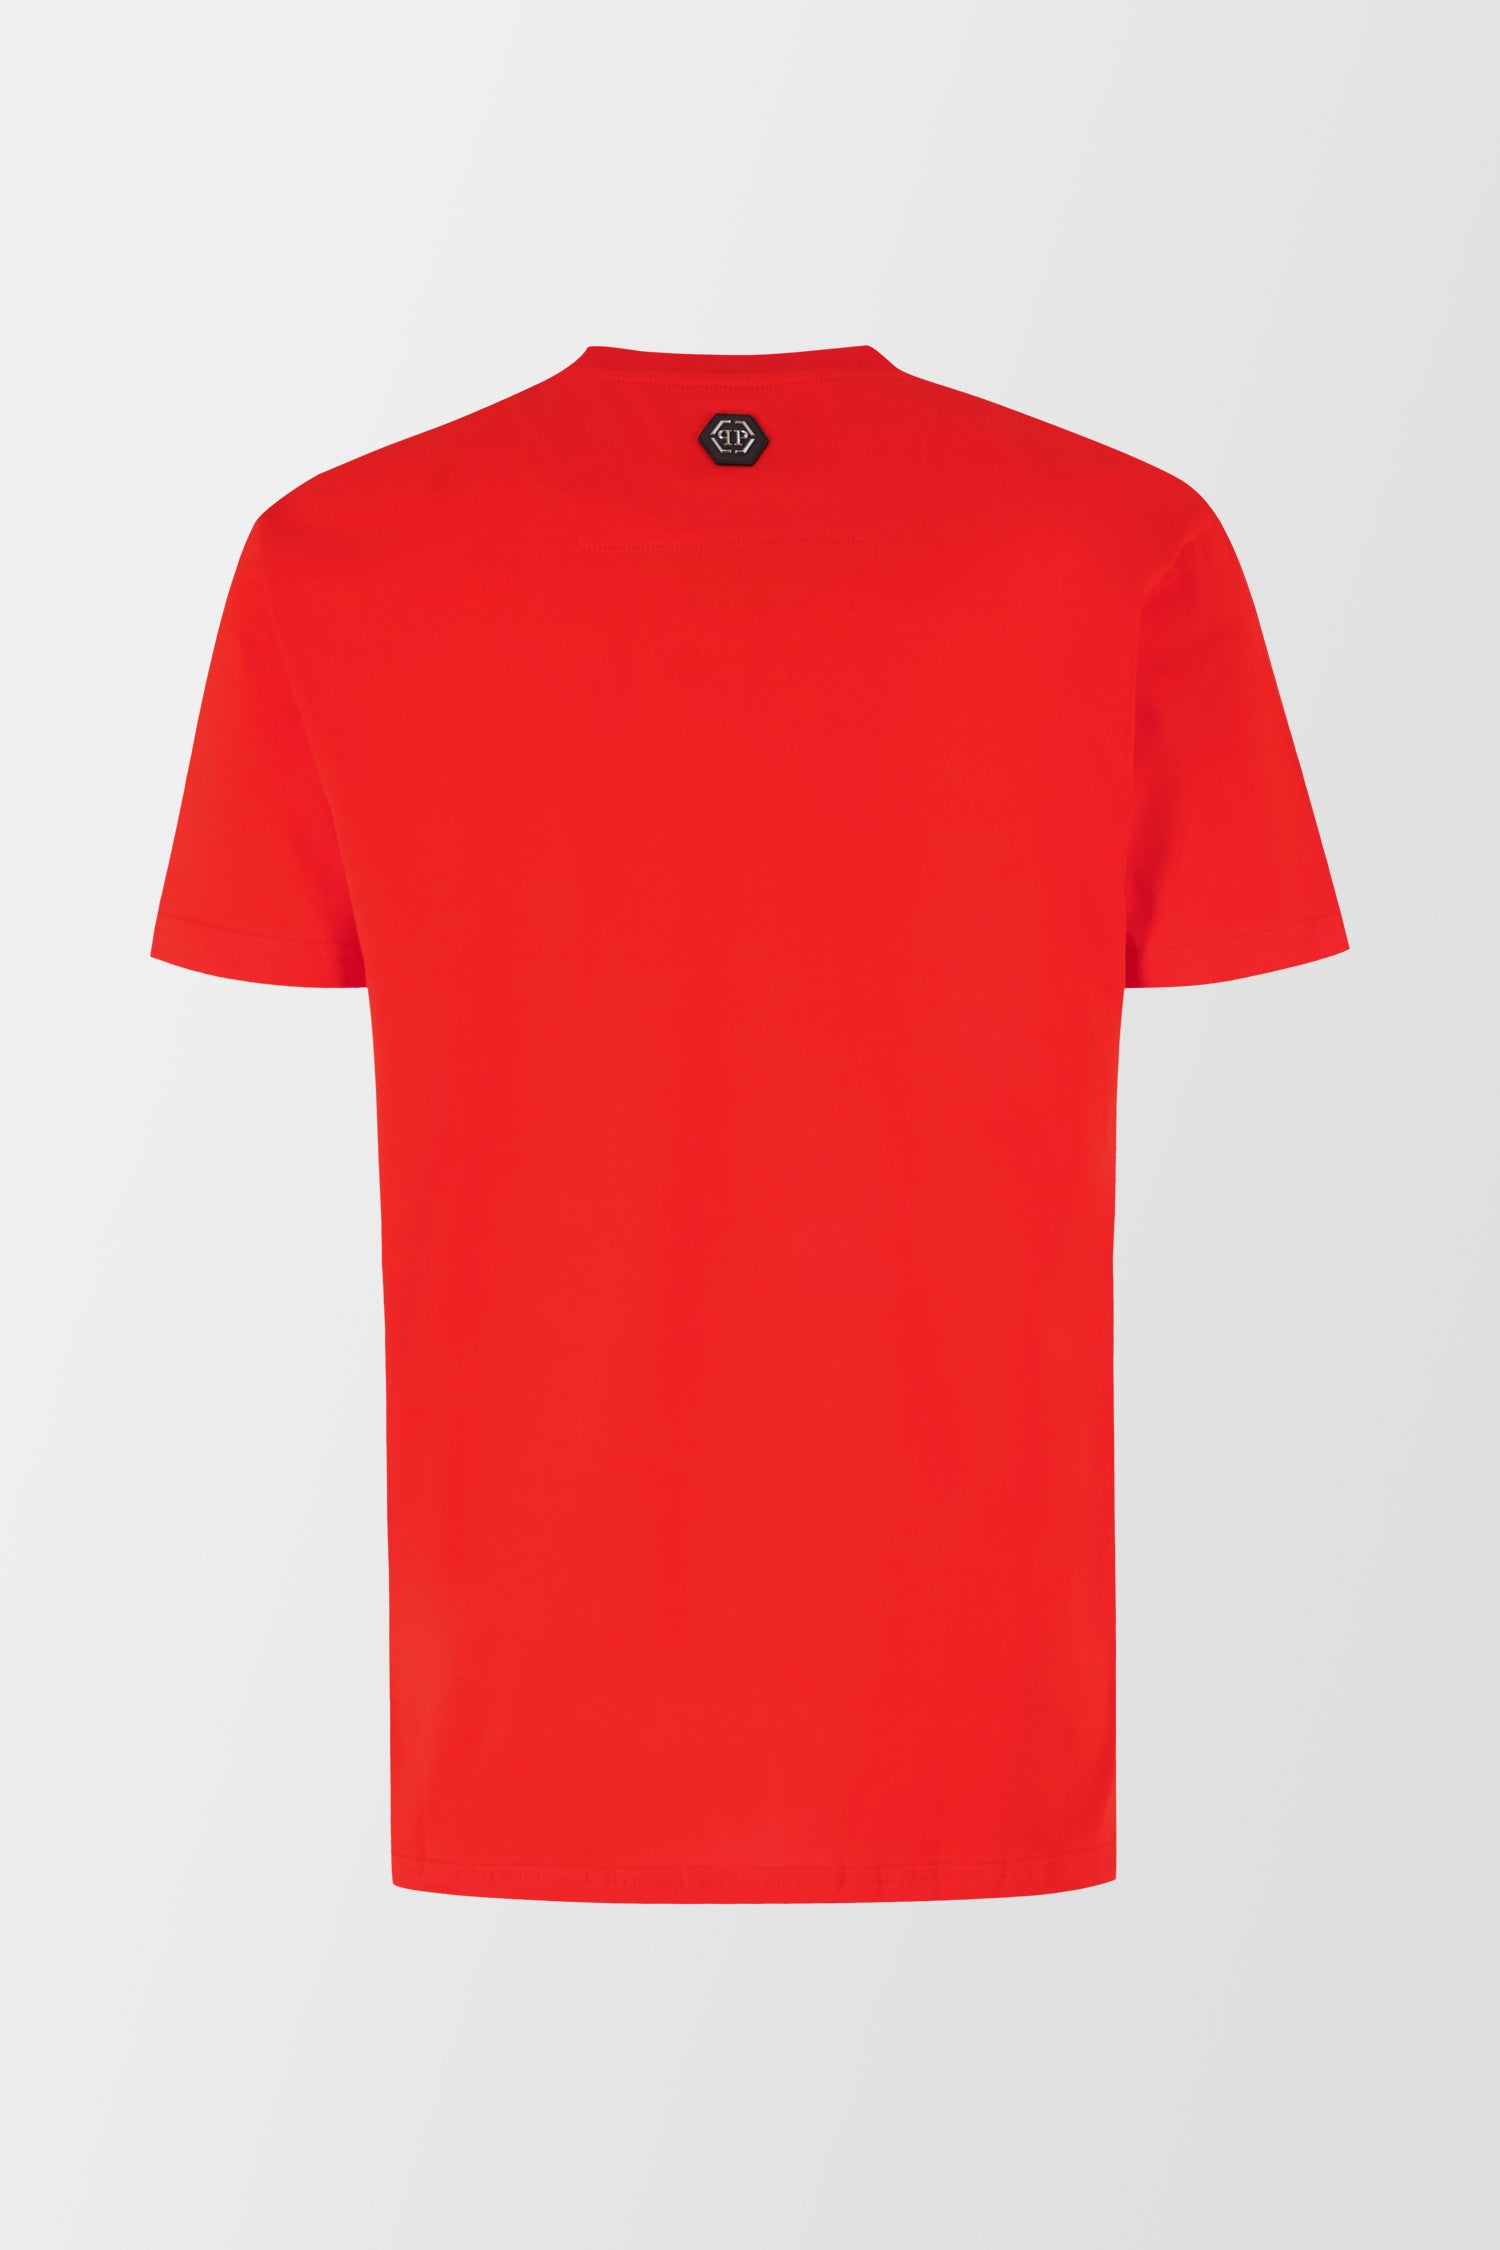 Philipp Plein Red Monster T-Shirt